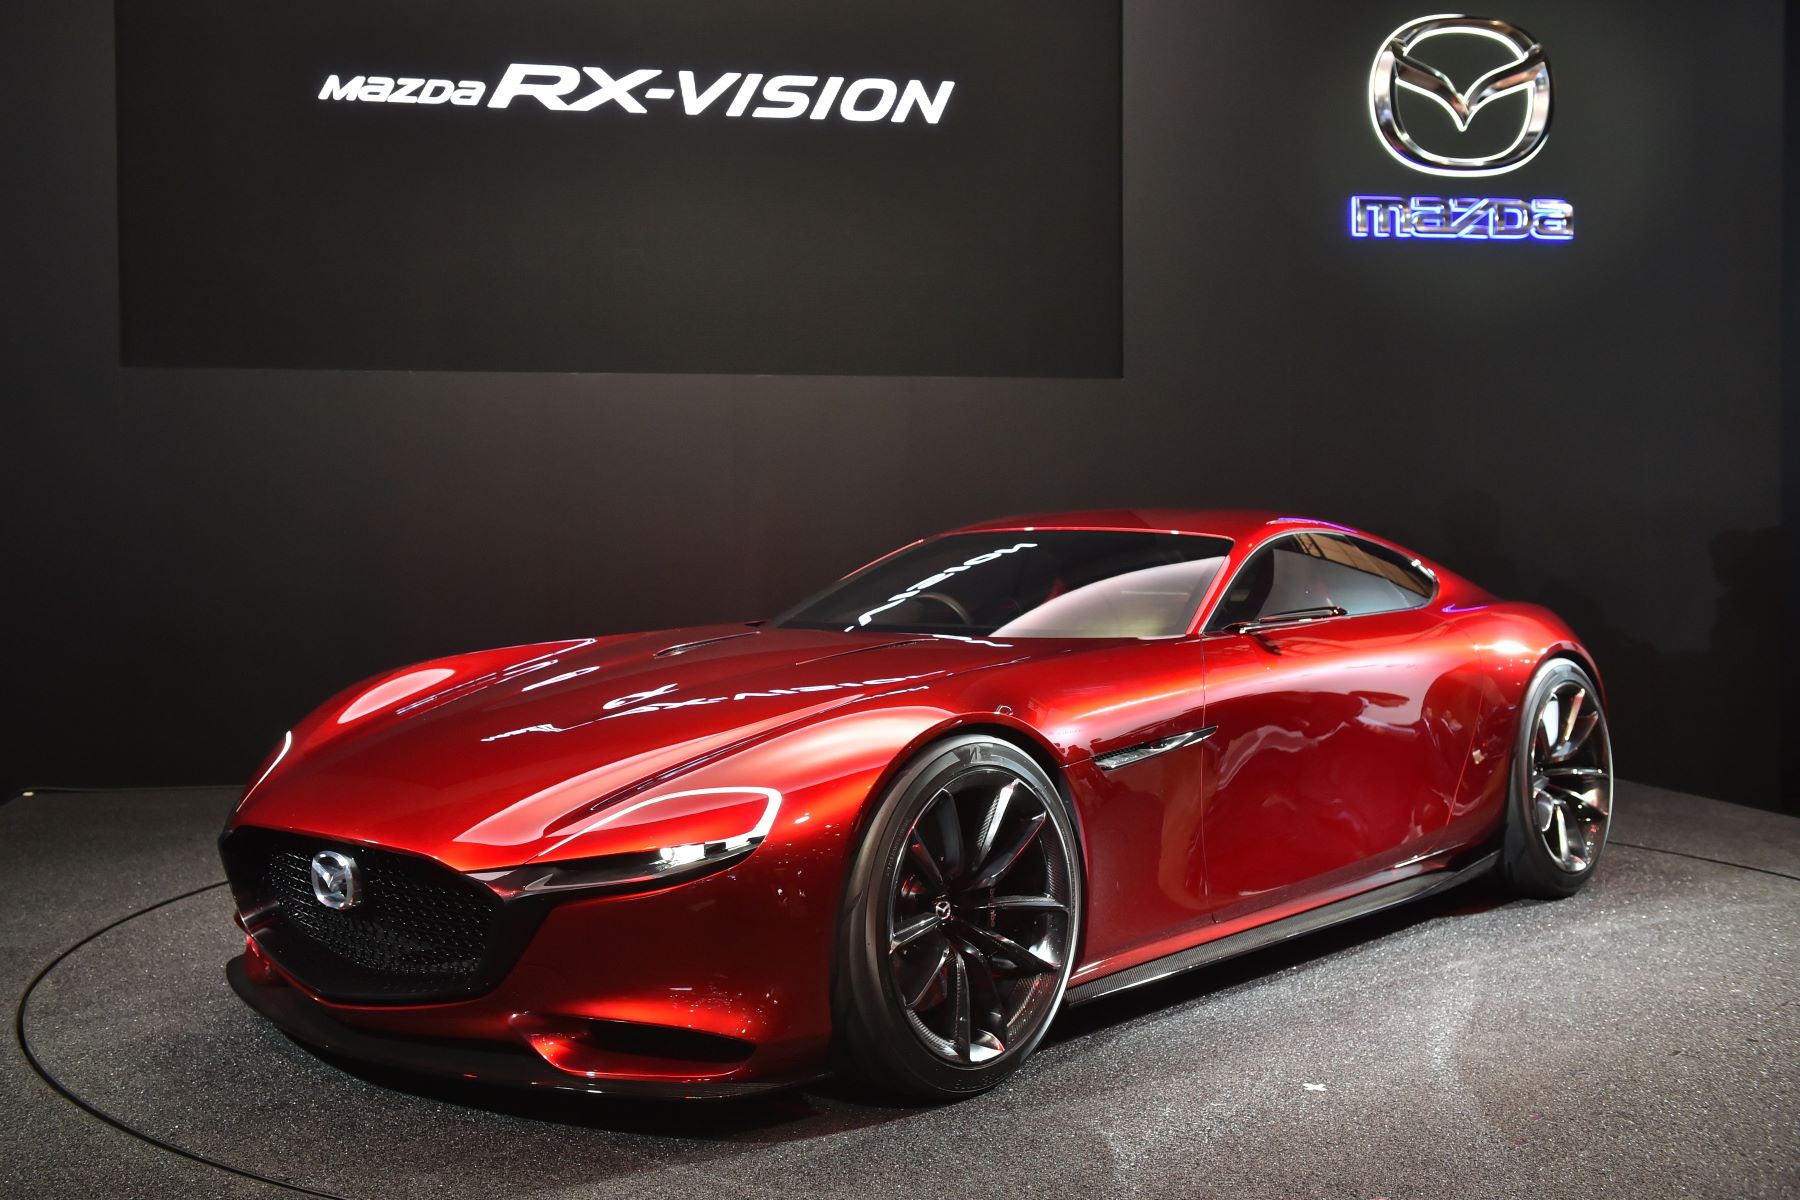 The Mazda RX-Vision rotary sports concept at the Tokyo Auto Salon